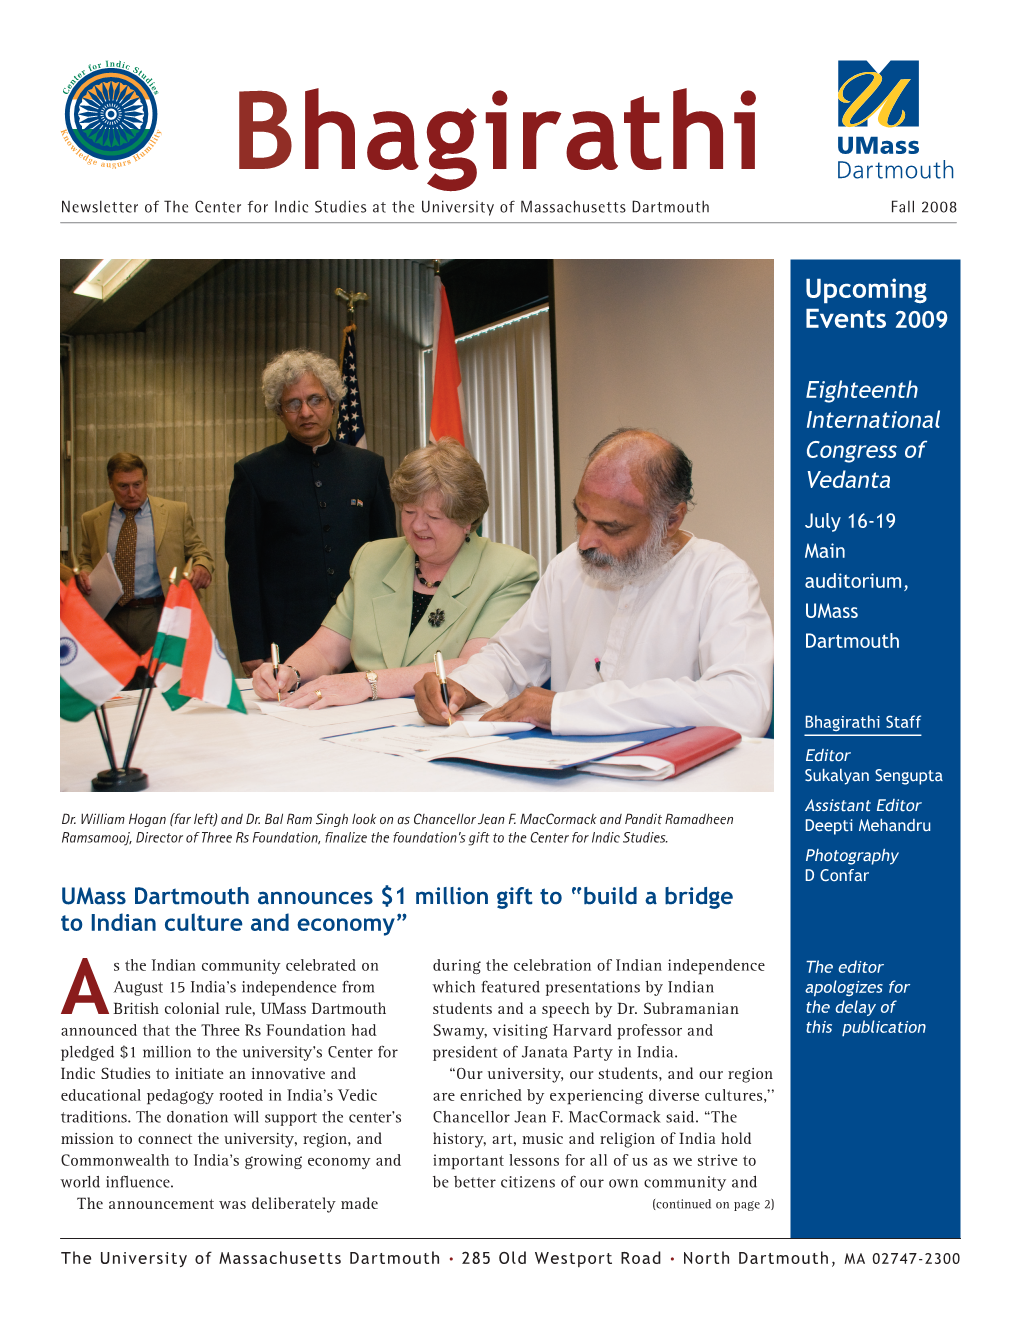 Bhagirathi Newsletter of the Center for Indic Studies at the University of Massachusetts Dartmouth Fall 2008